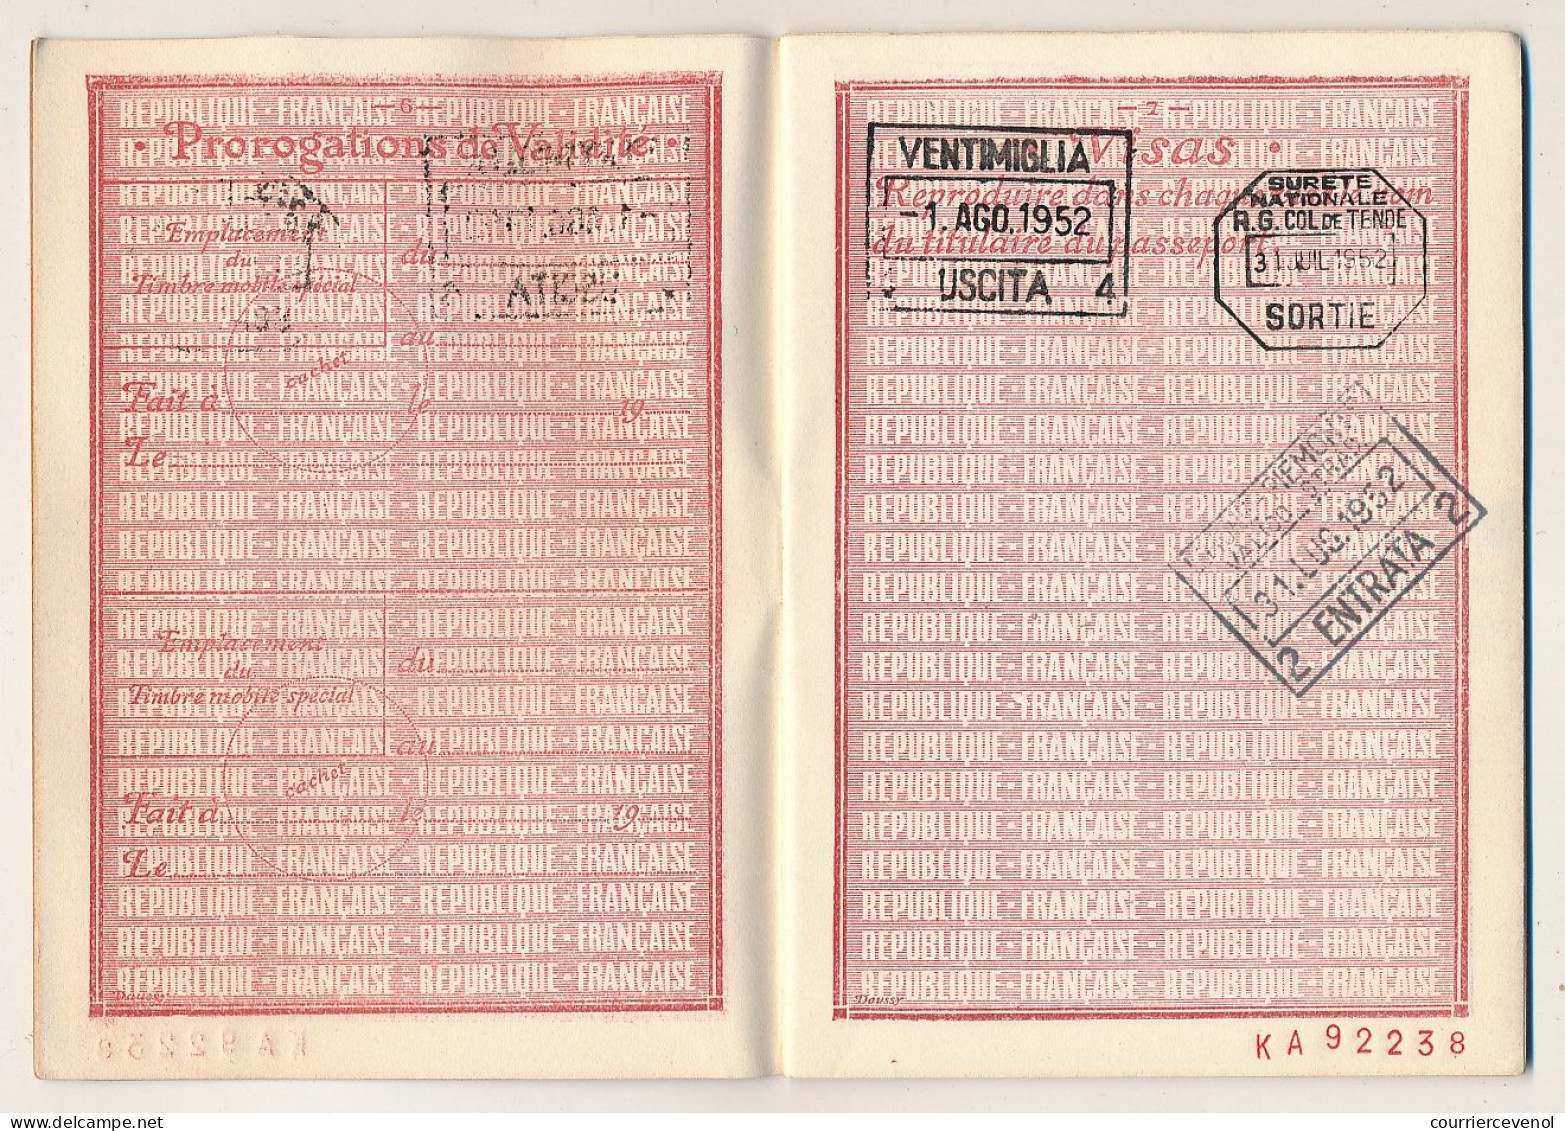 FRANCE - Passeport à l'étranger 700F  - Nice (Alpes Maritimes) - 1951